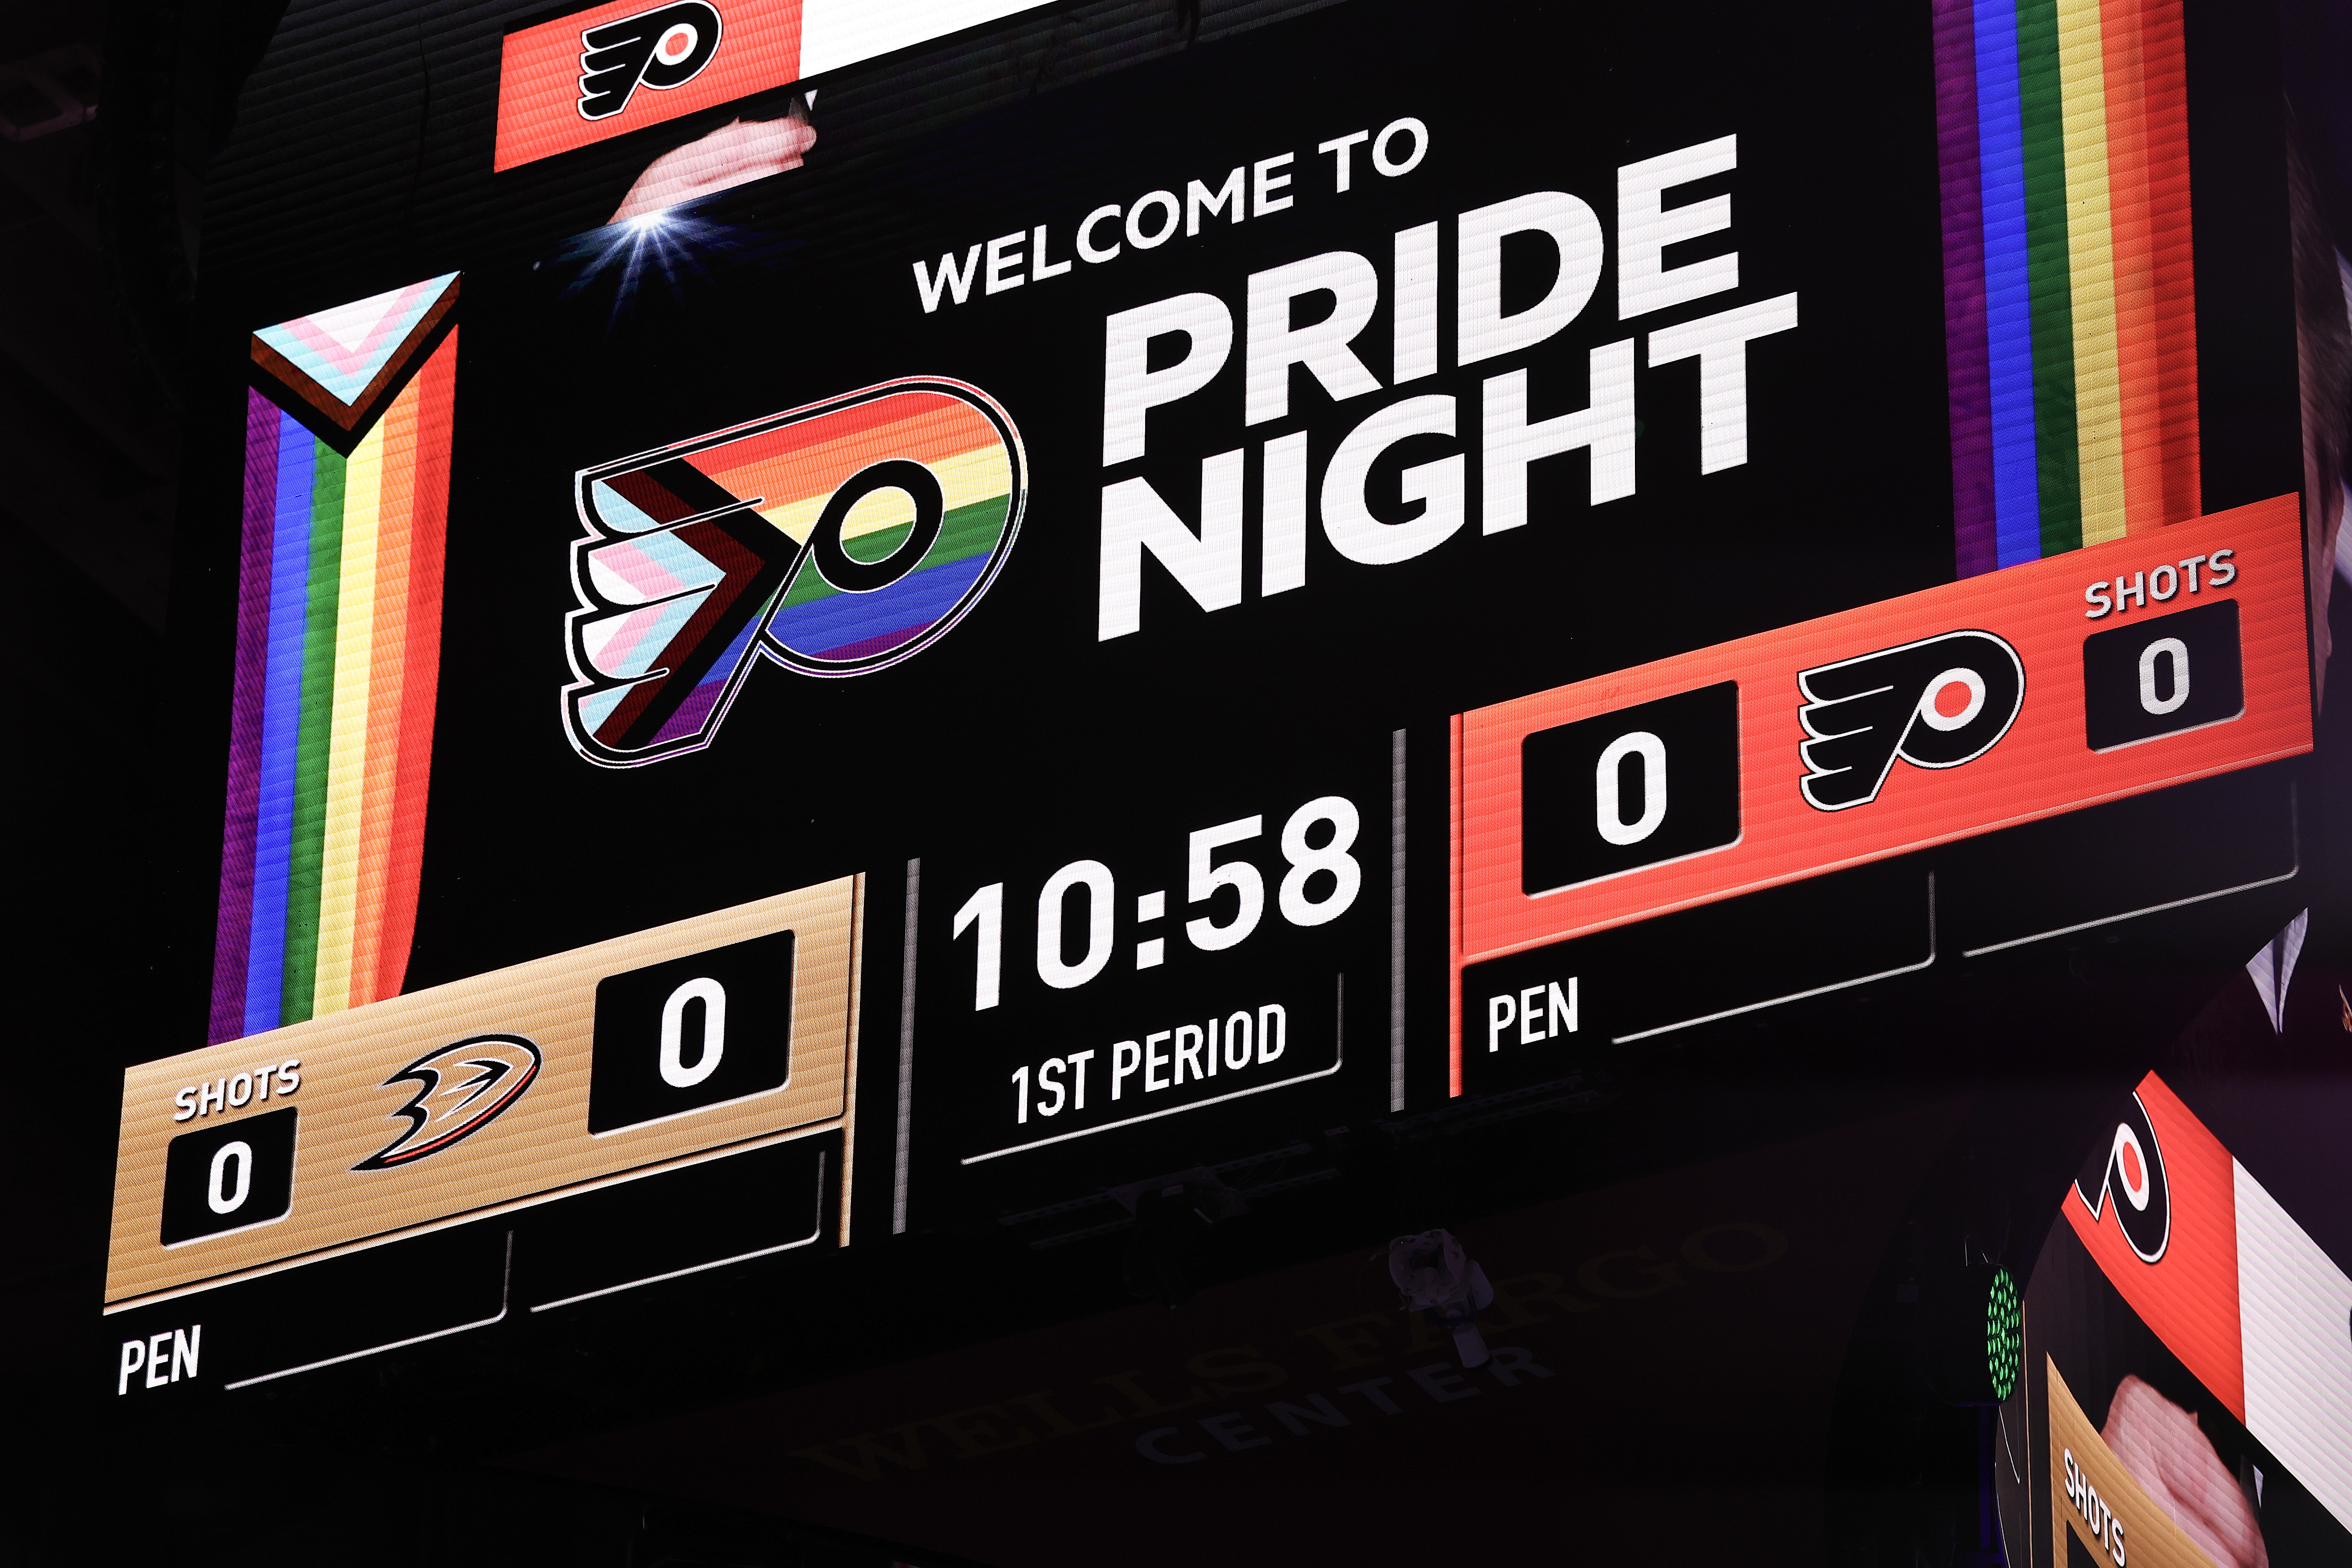 Philadelphia Flyers defenseman Ivan Provorov boycotts Pride Night event